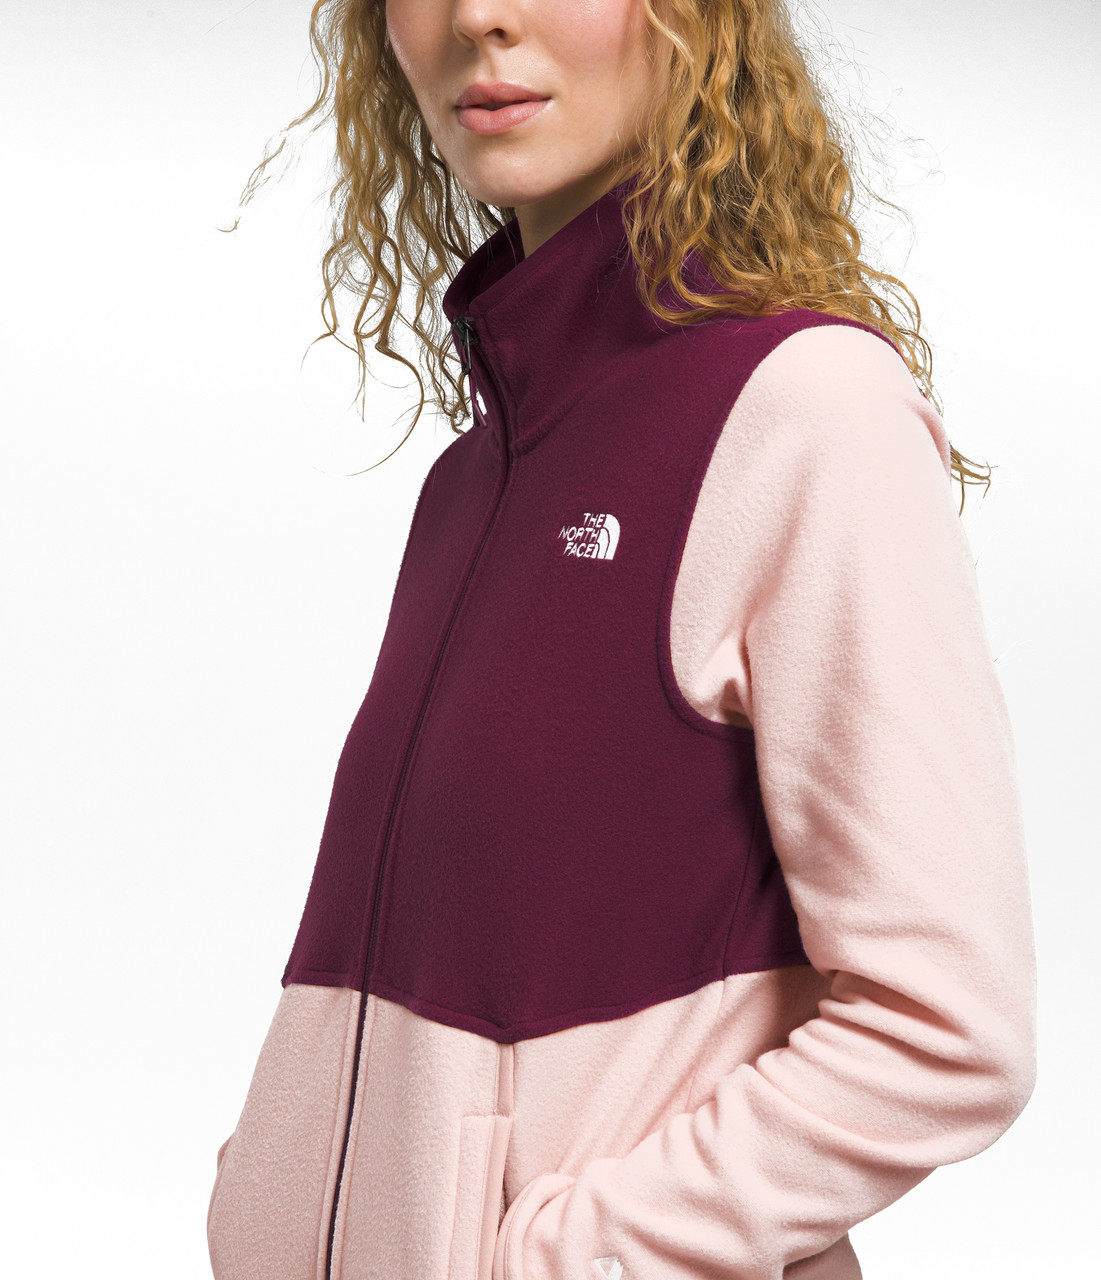 The North Face Alpine Polartec(r) 100 Jacket (TNF Medium Grey Heather)  Women's Clothing - ShopStyle